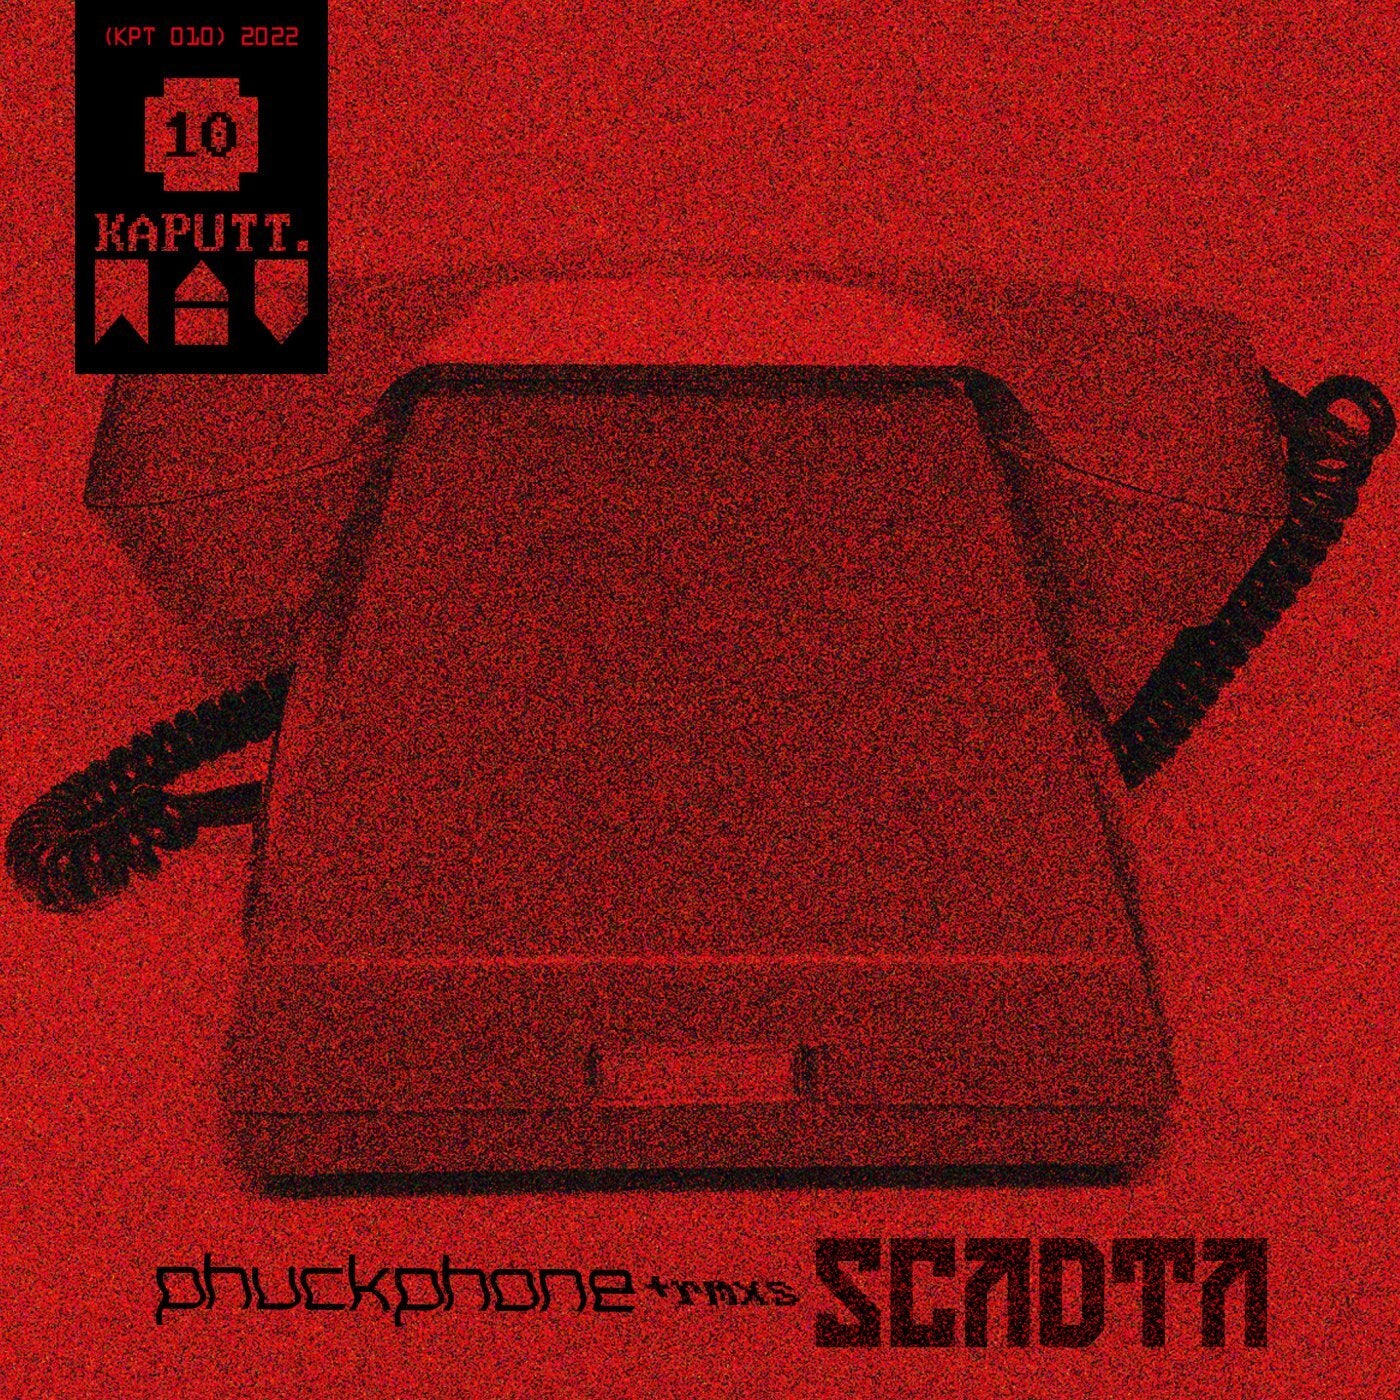 Phuckphone